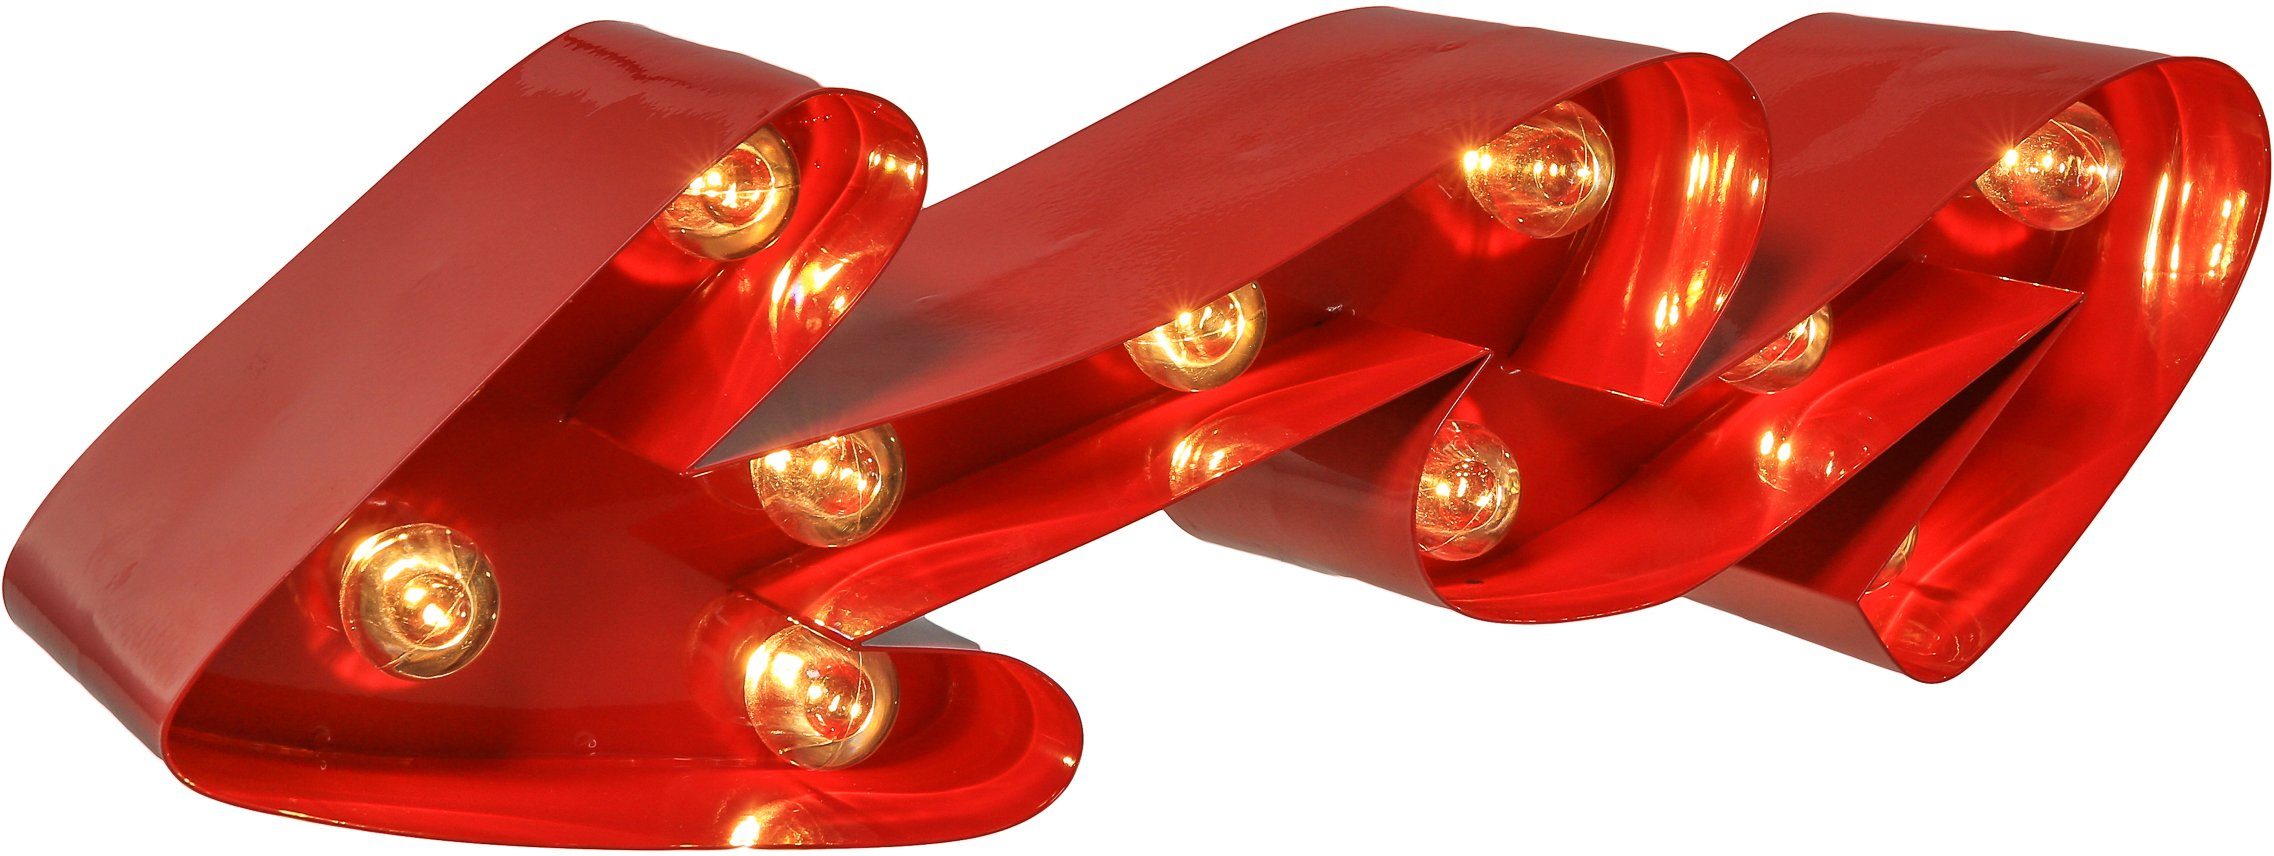 MARQUEE LIGHTS fest LED Curved Wandlampe, Arrow LEDs mit festverbauten Warmweiß, integriert, Tischlampe 10 Dekolicht - Curved 38x12cm Arrow, LED